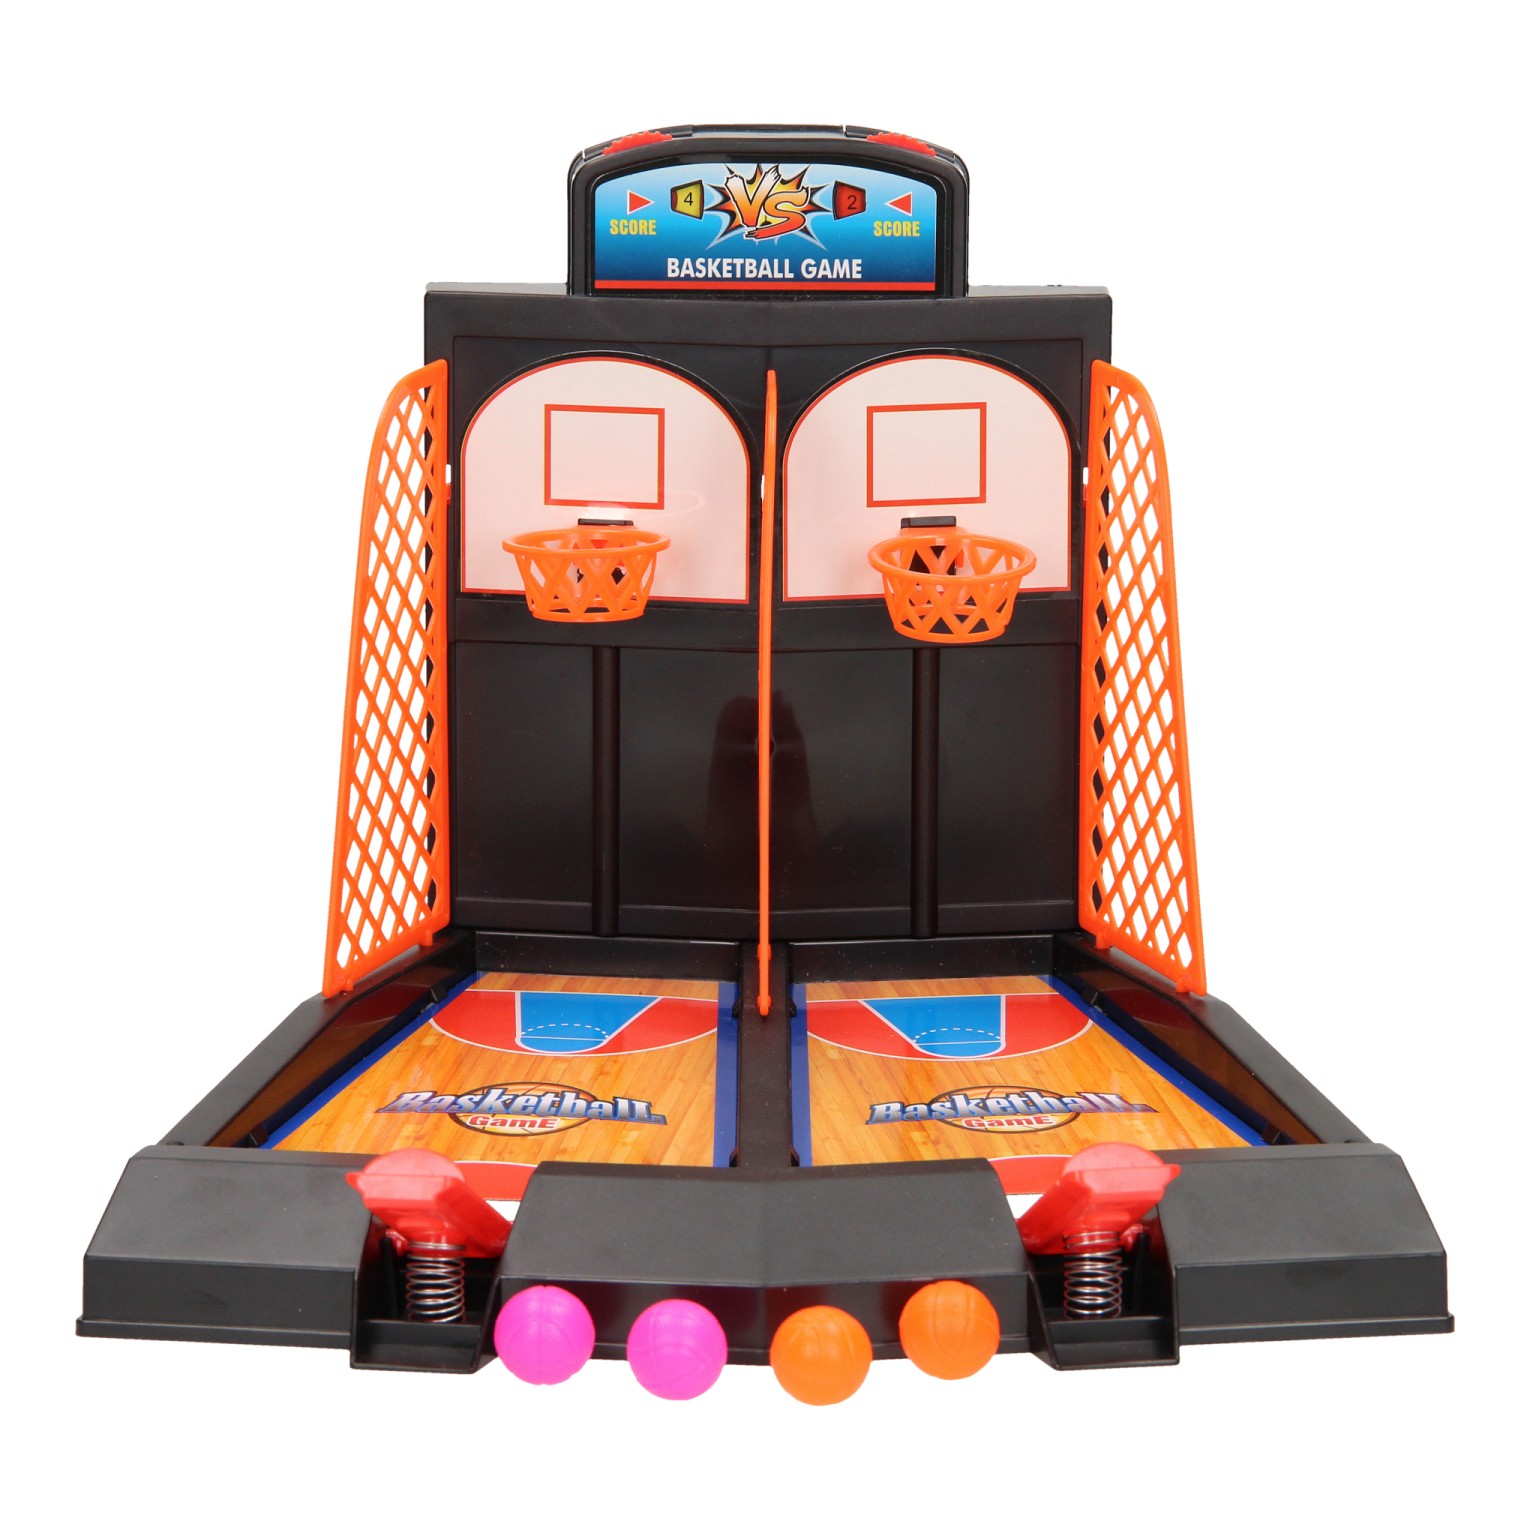 pijpleiding Decoderen Accumulatie Basketball Duel Game | Thimble Toys